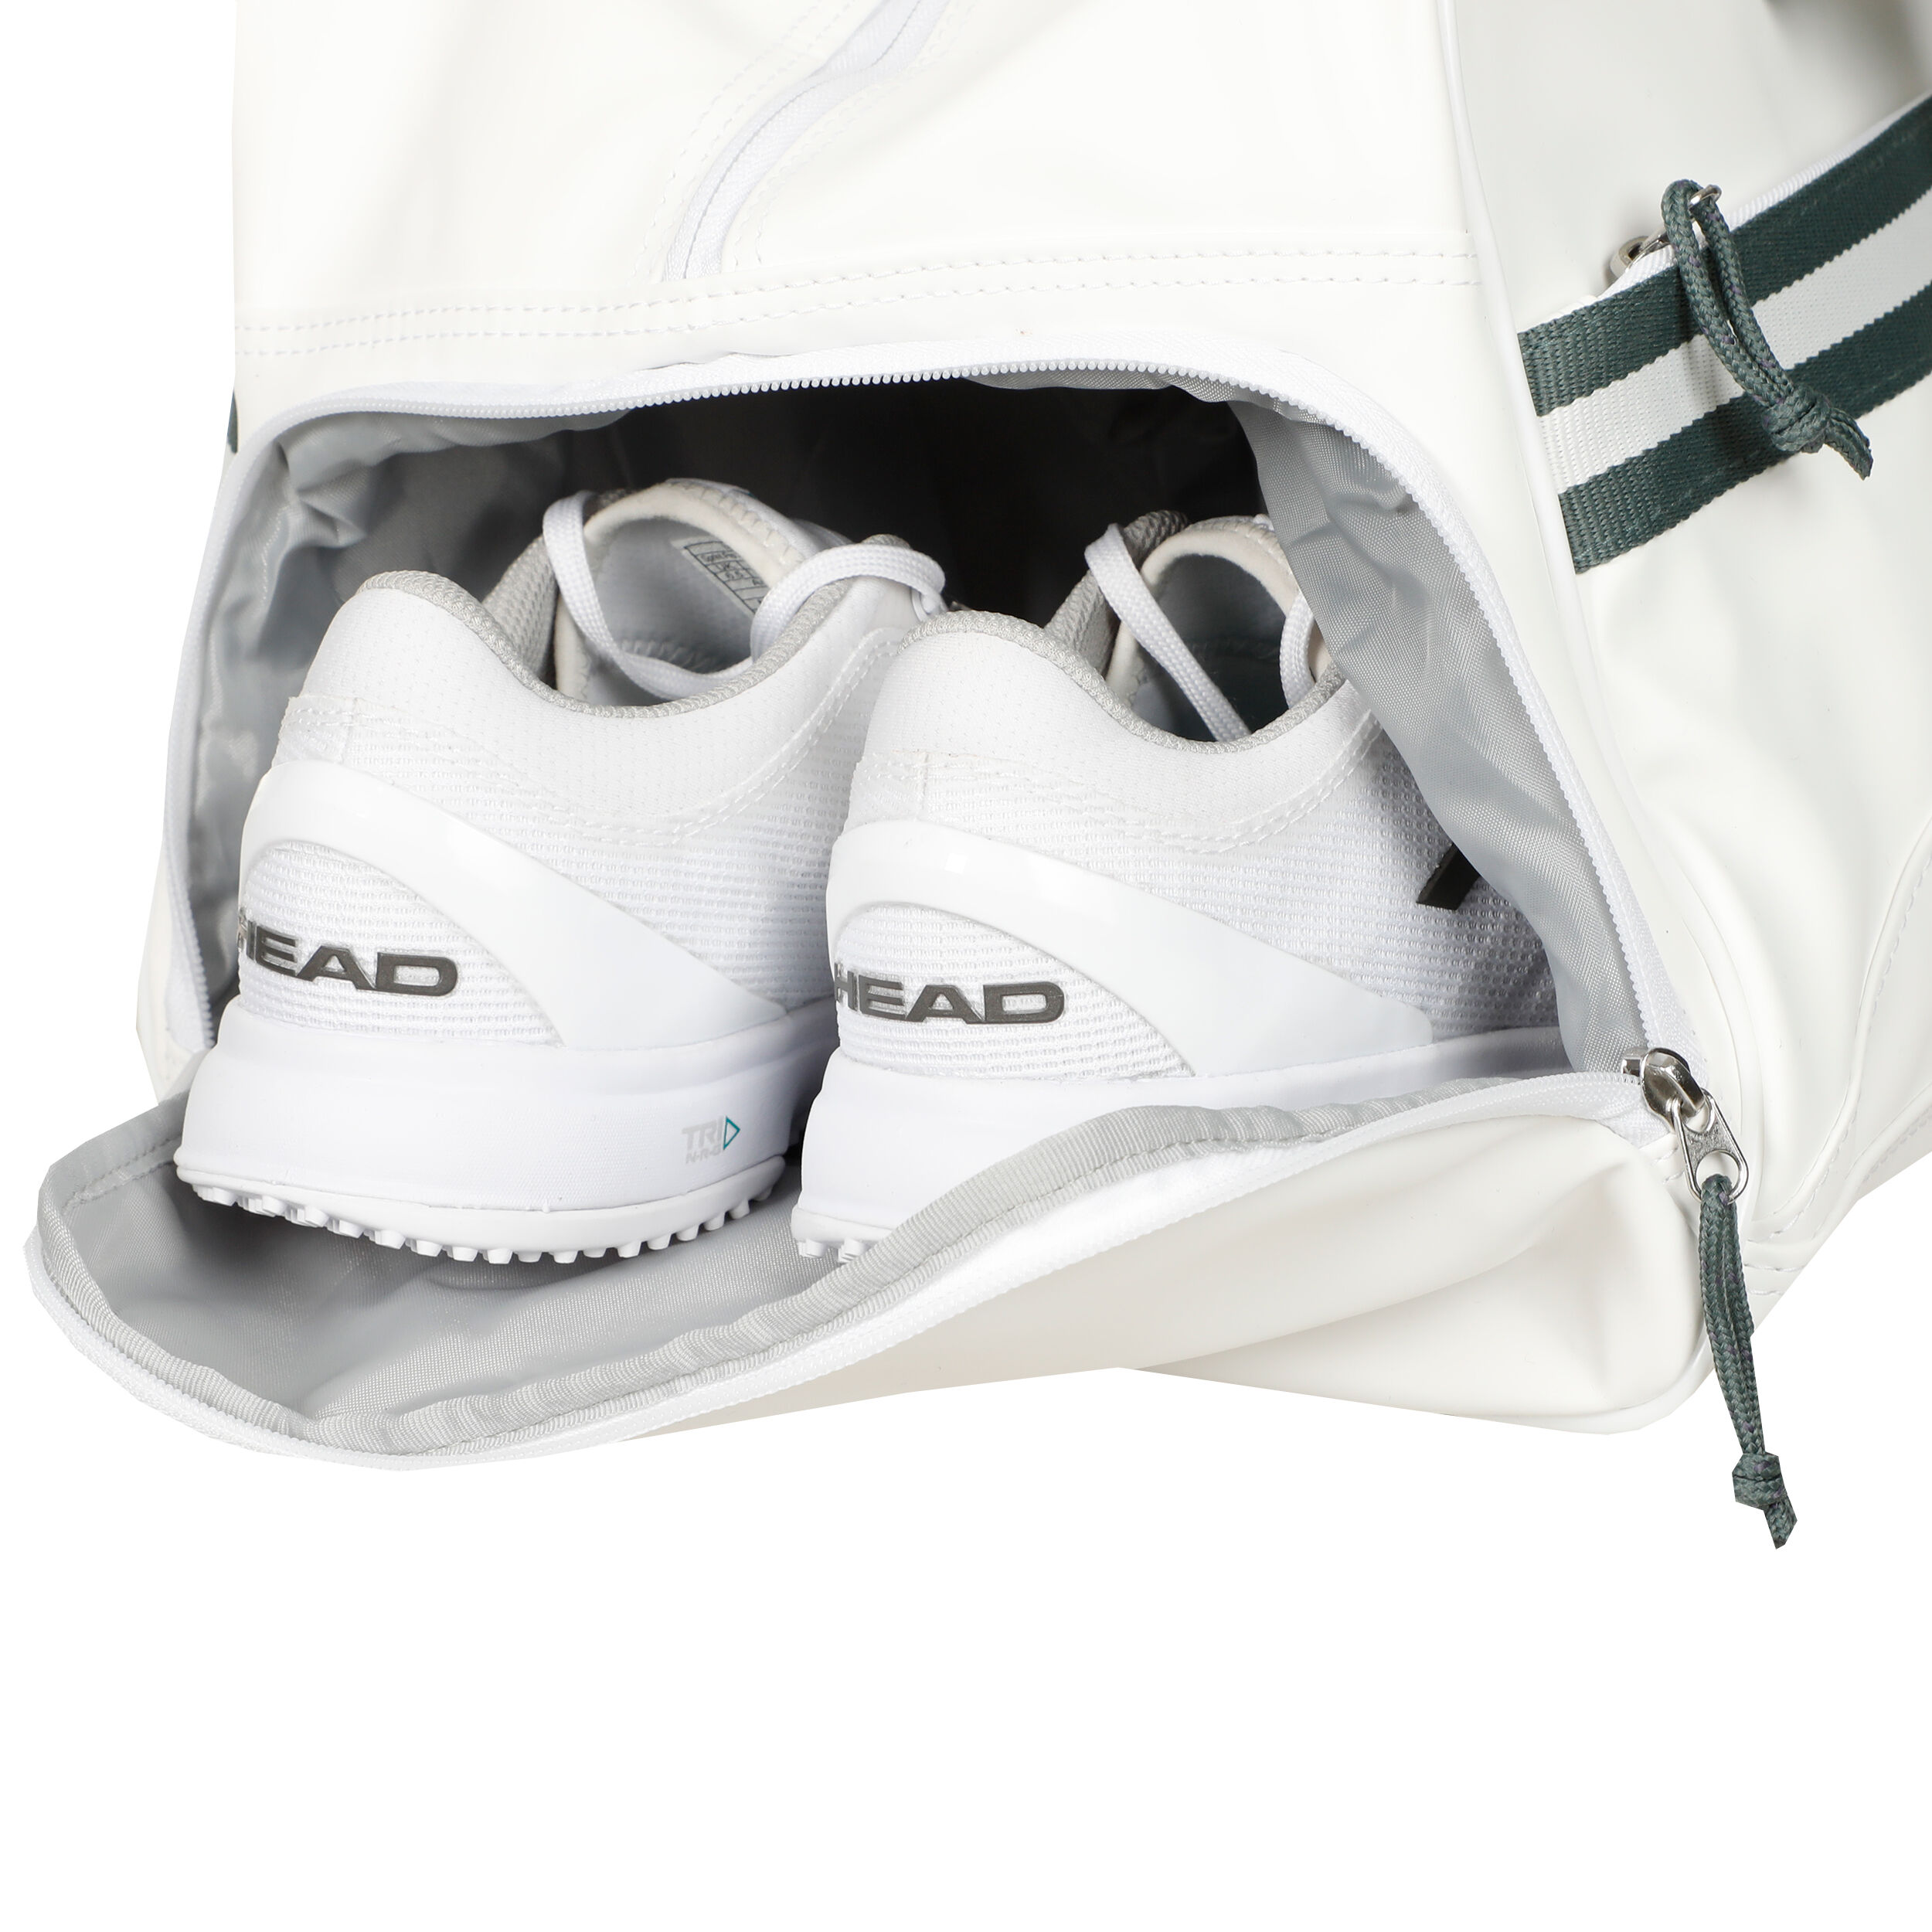 Pro X Court Bag 40L Sports Bag - White